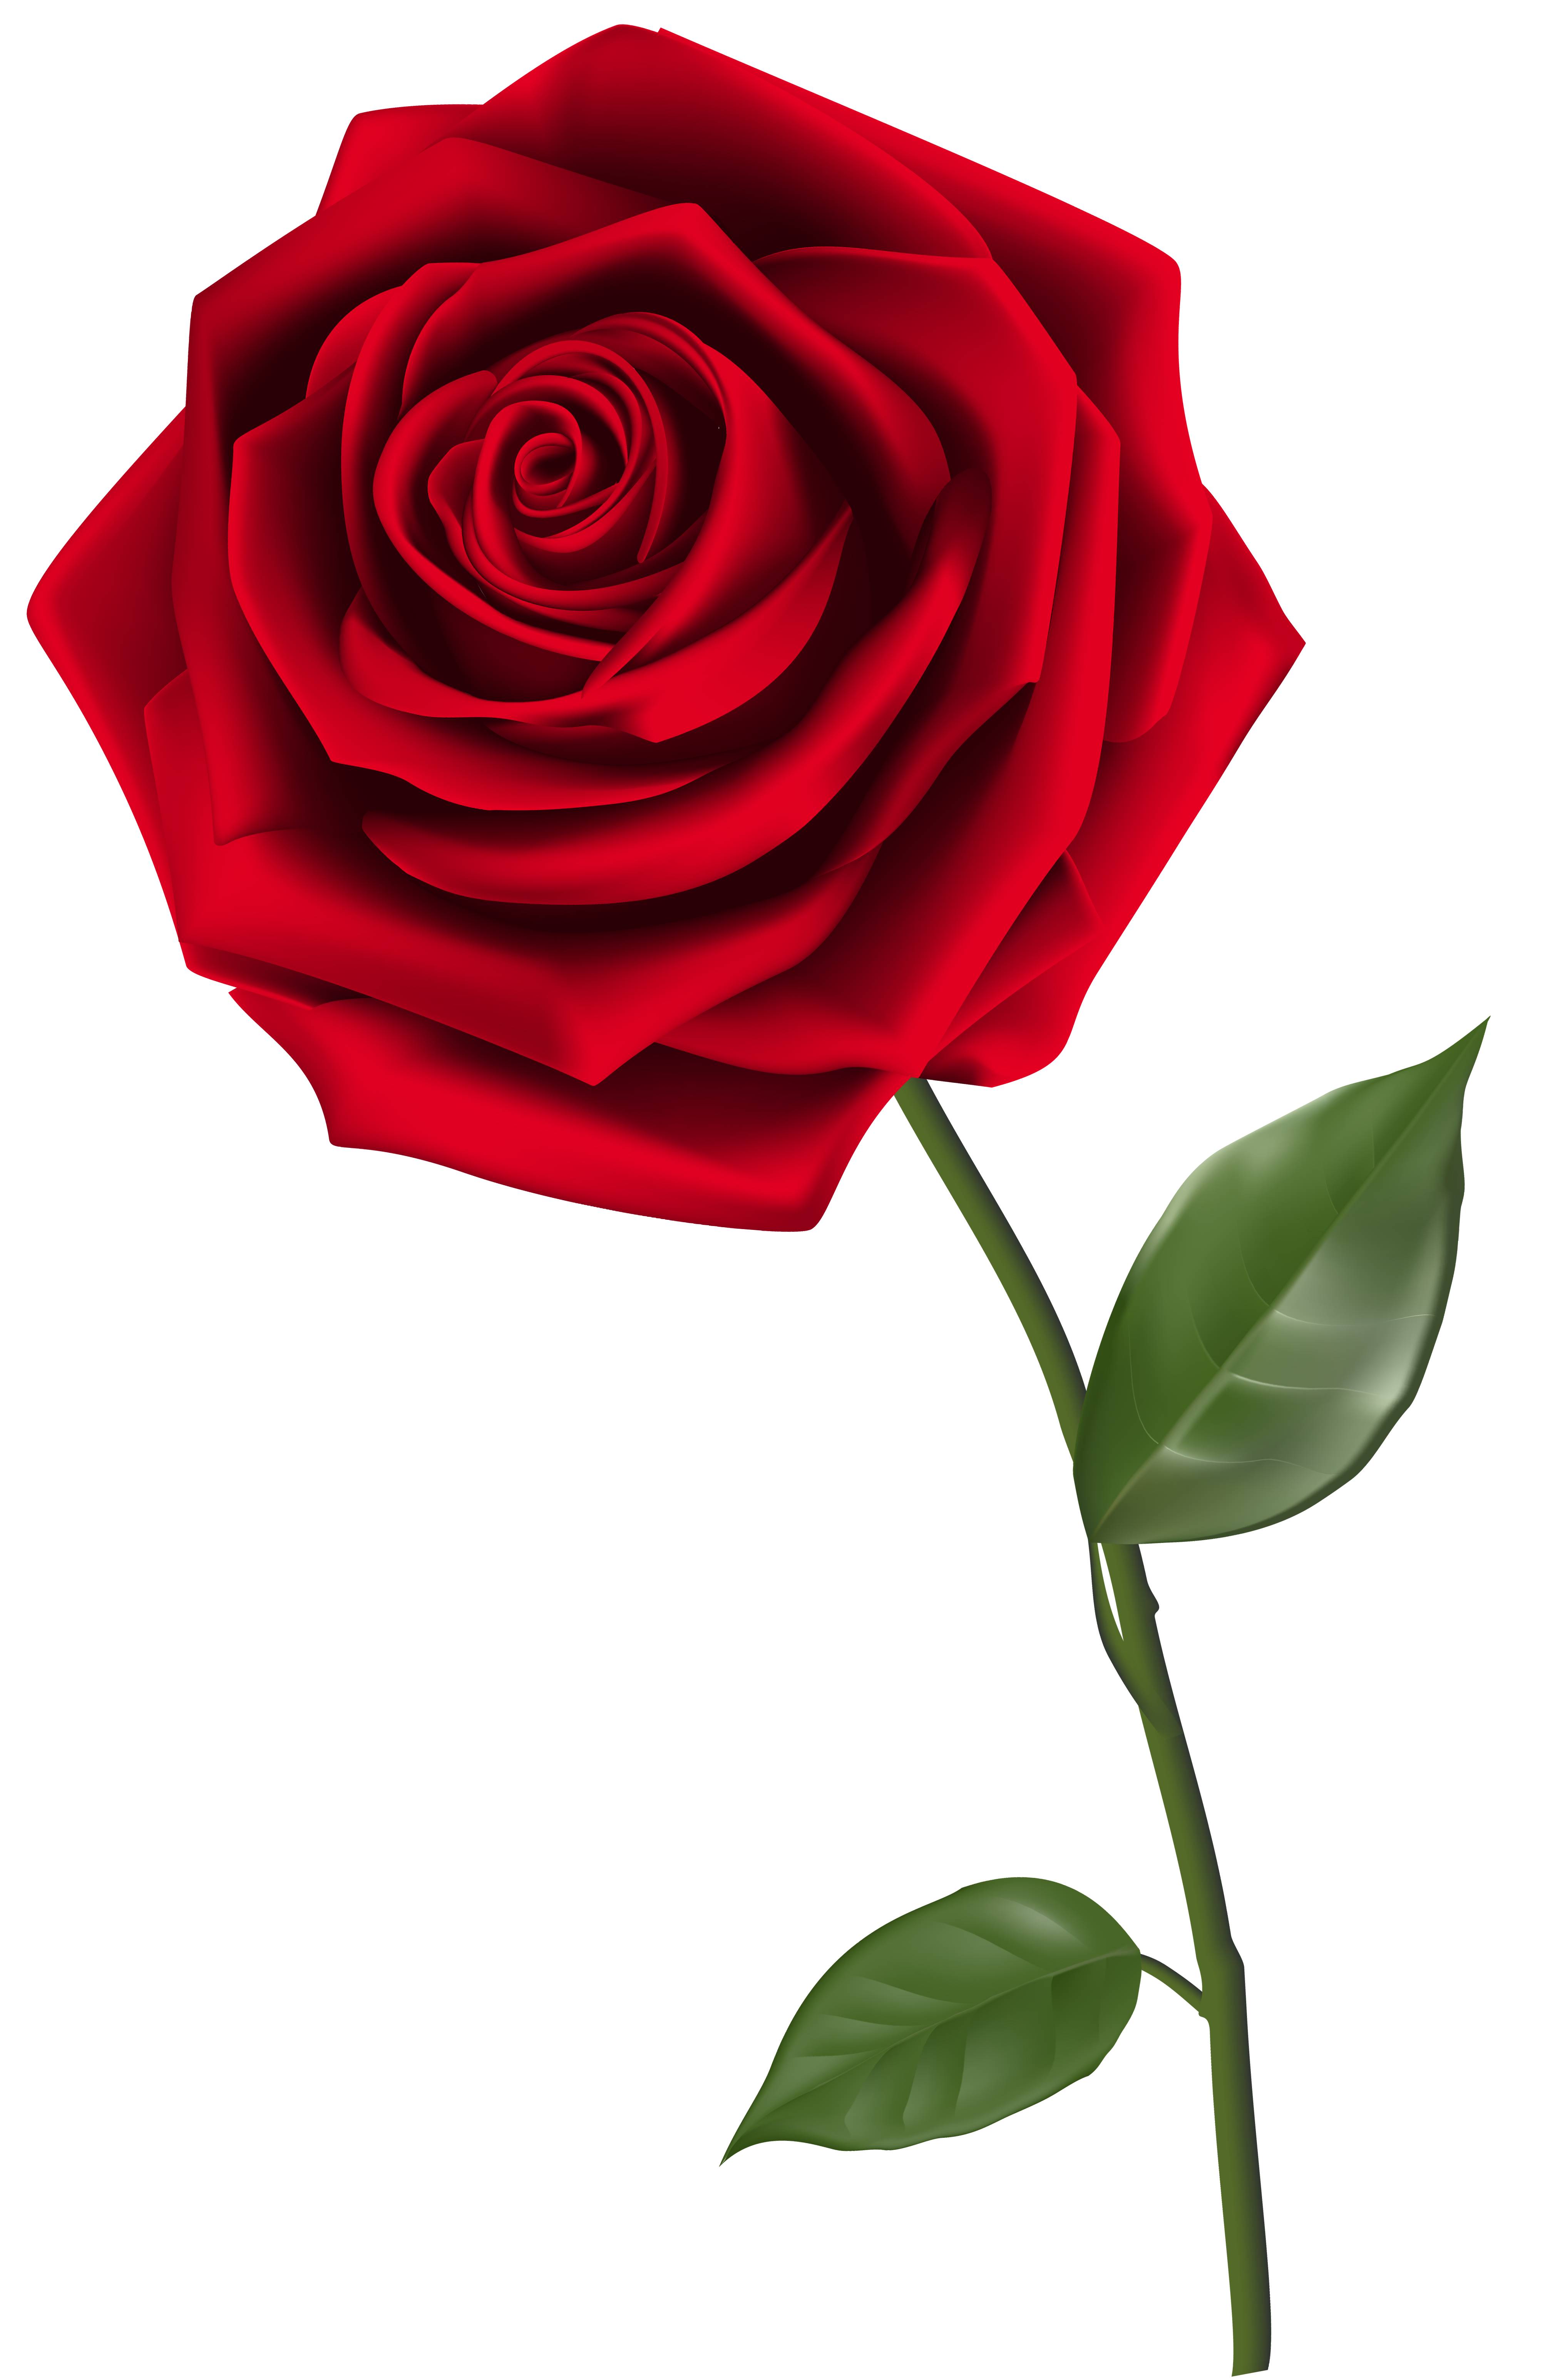 single red rose clipart image roses, flower #40621